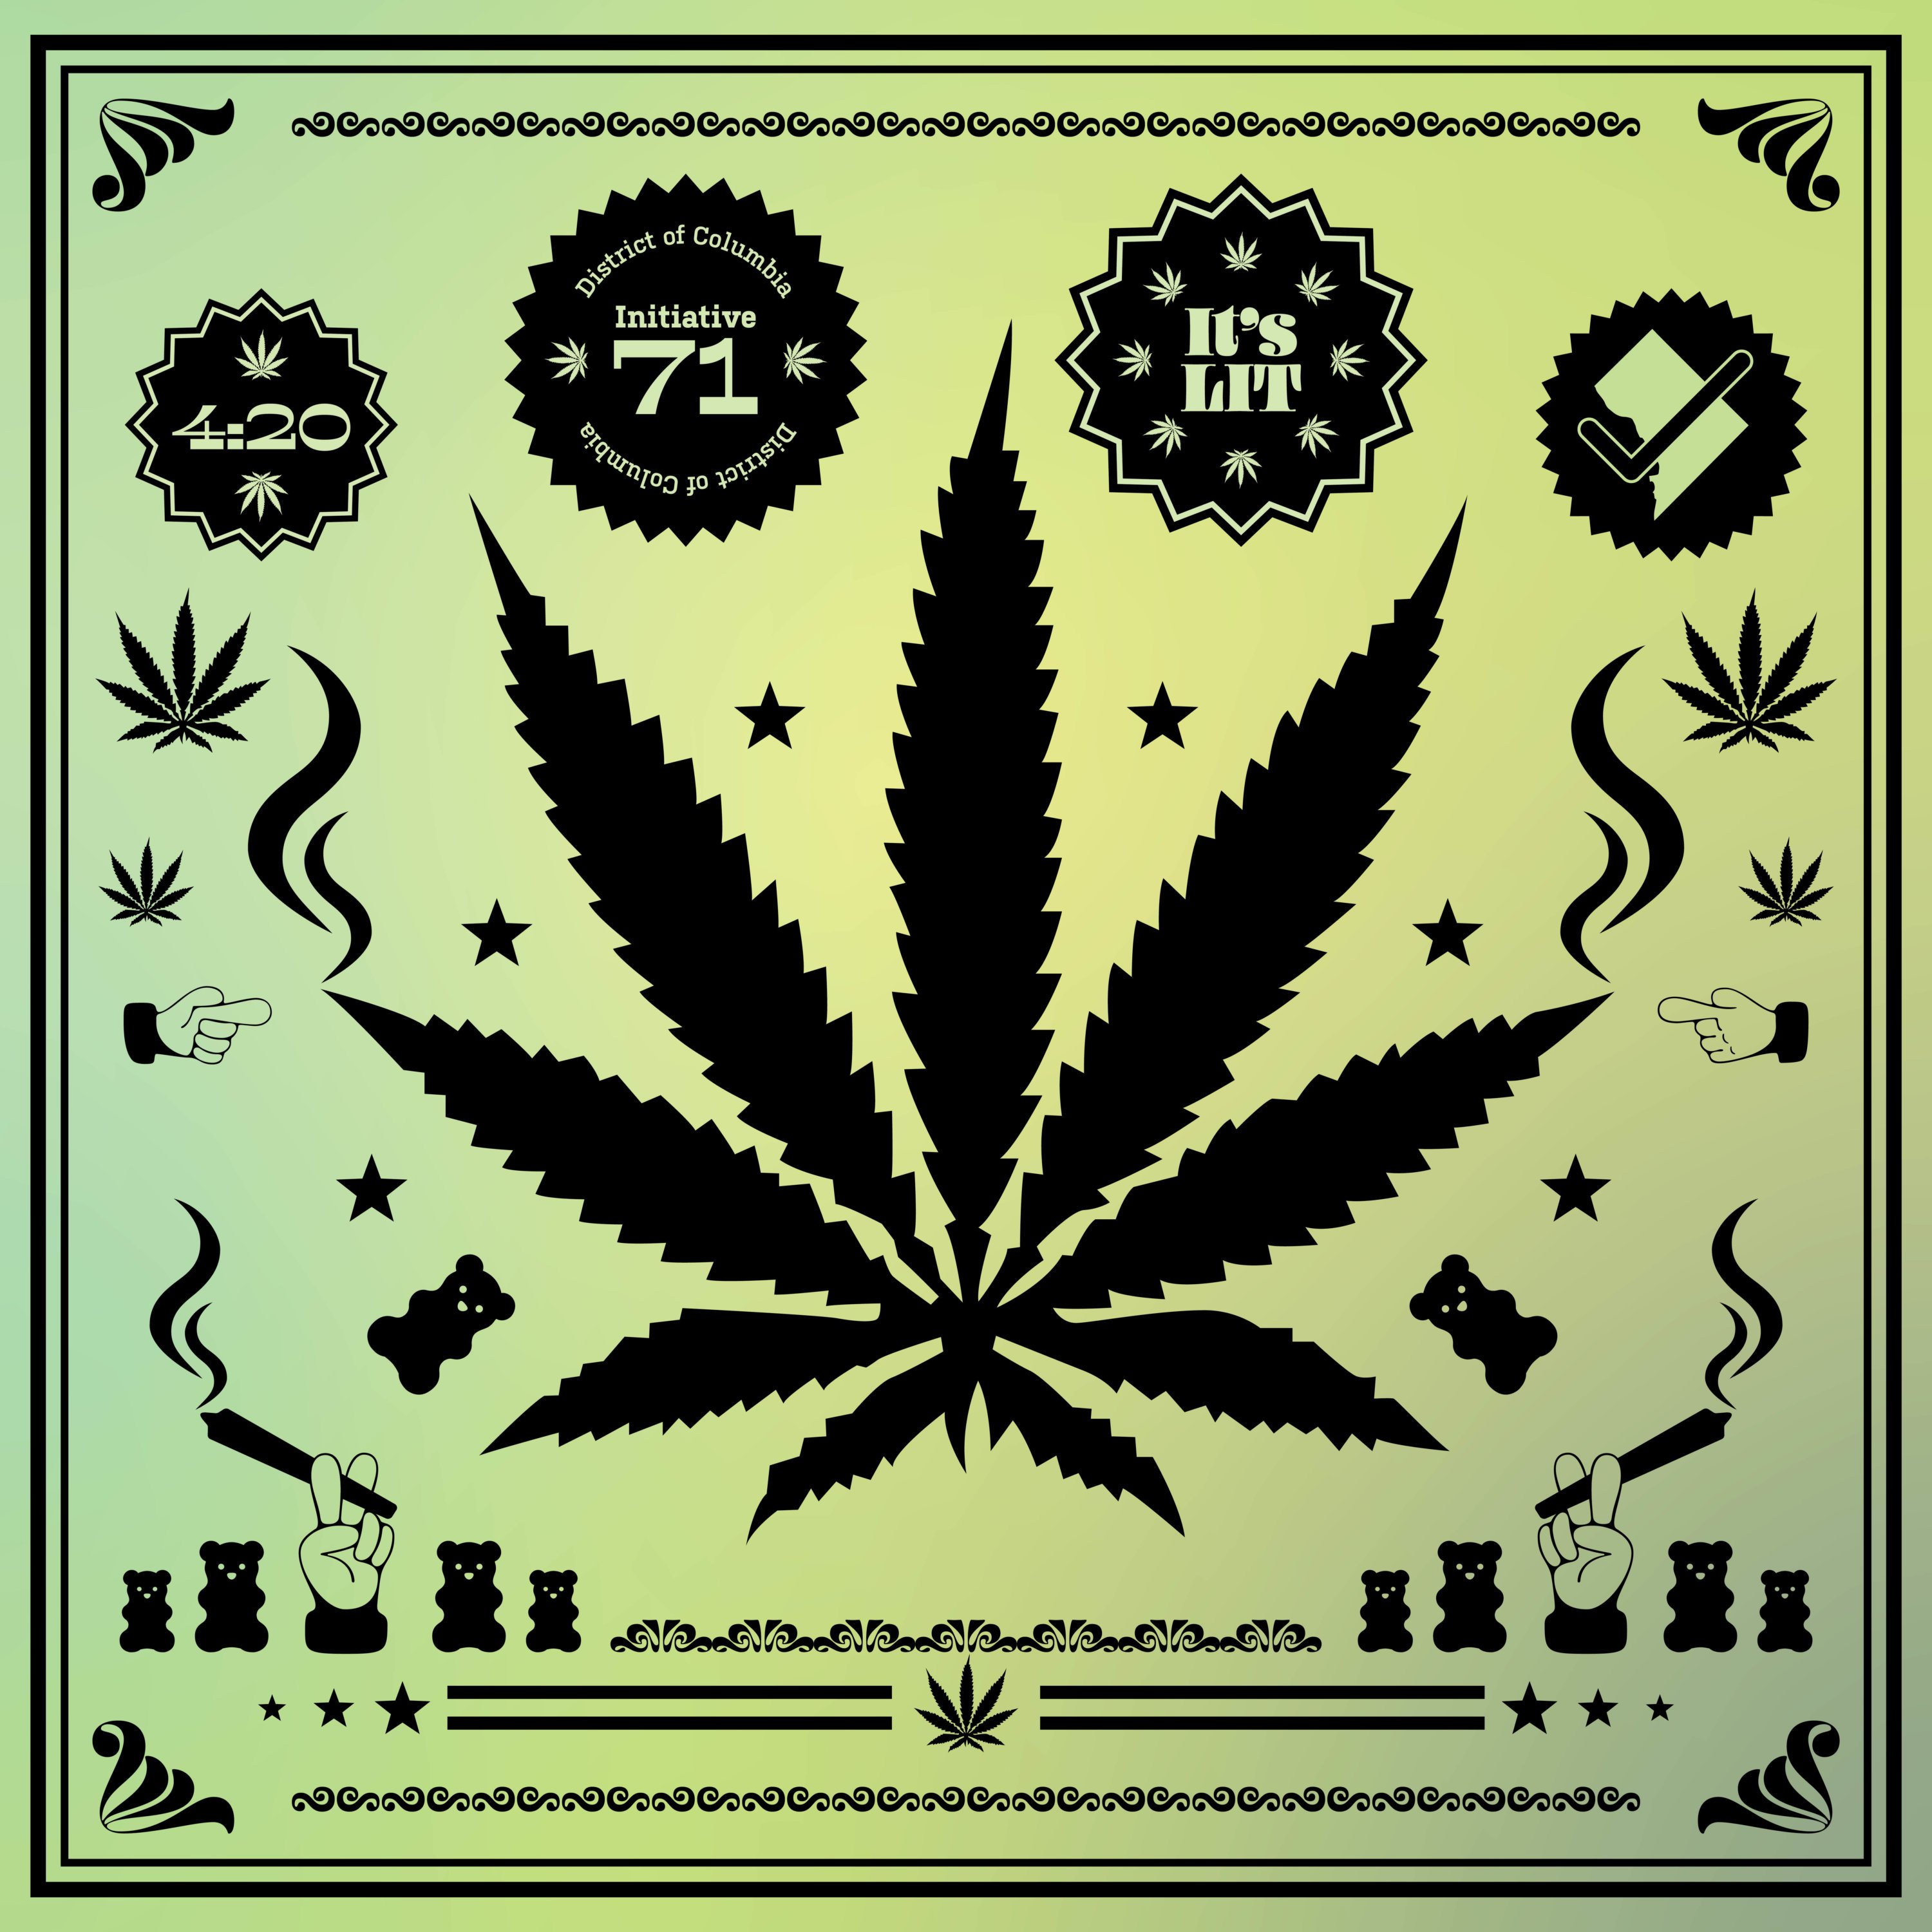 How to make cannabis hashish hassle free